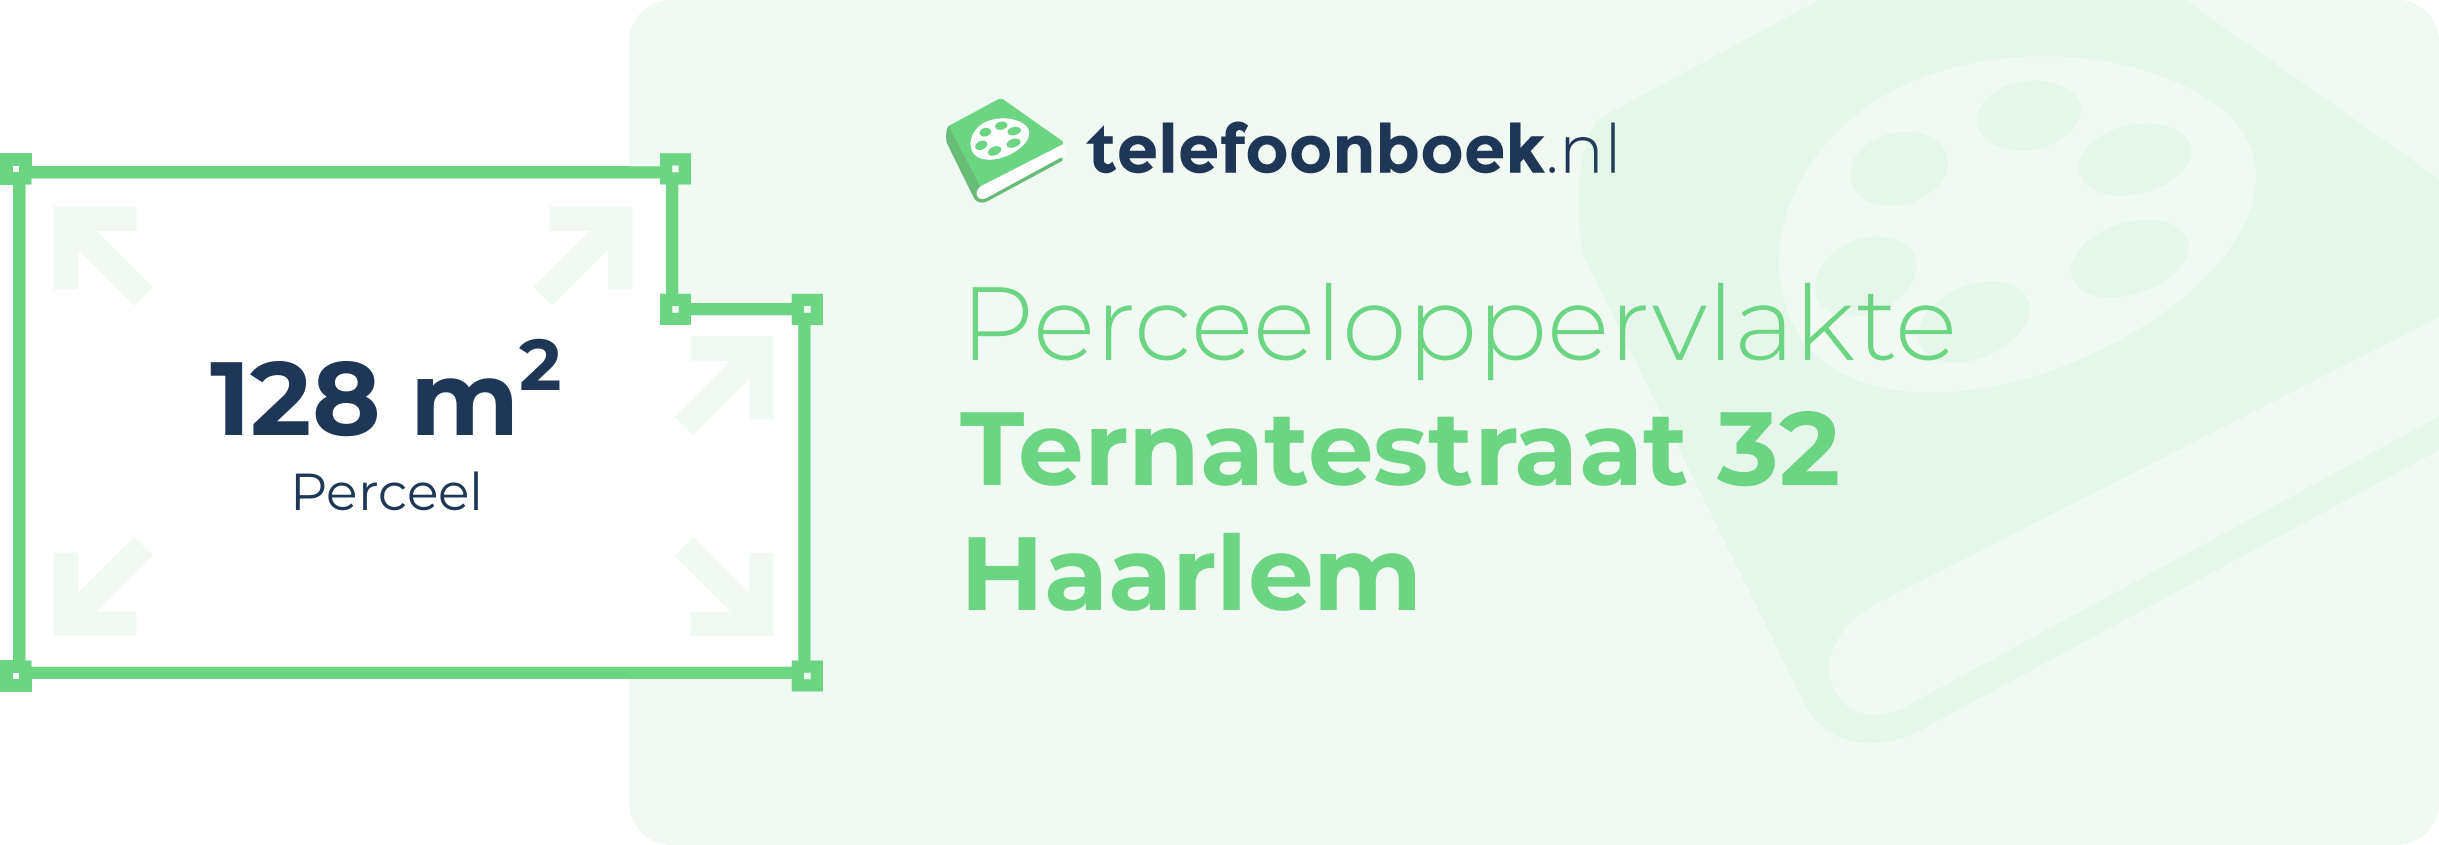 Perceeloppervlakte Ternatestraat 32 Haarlem